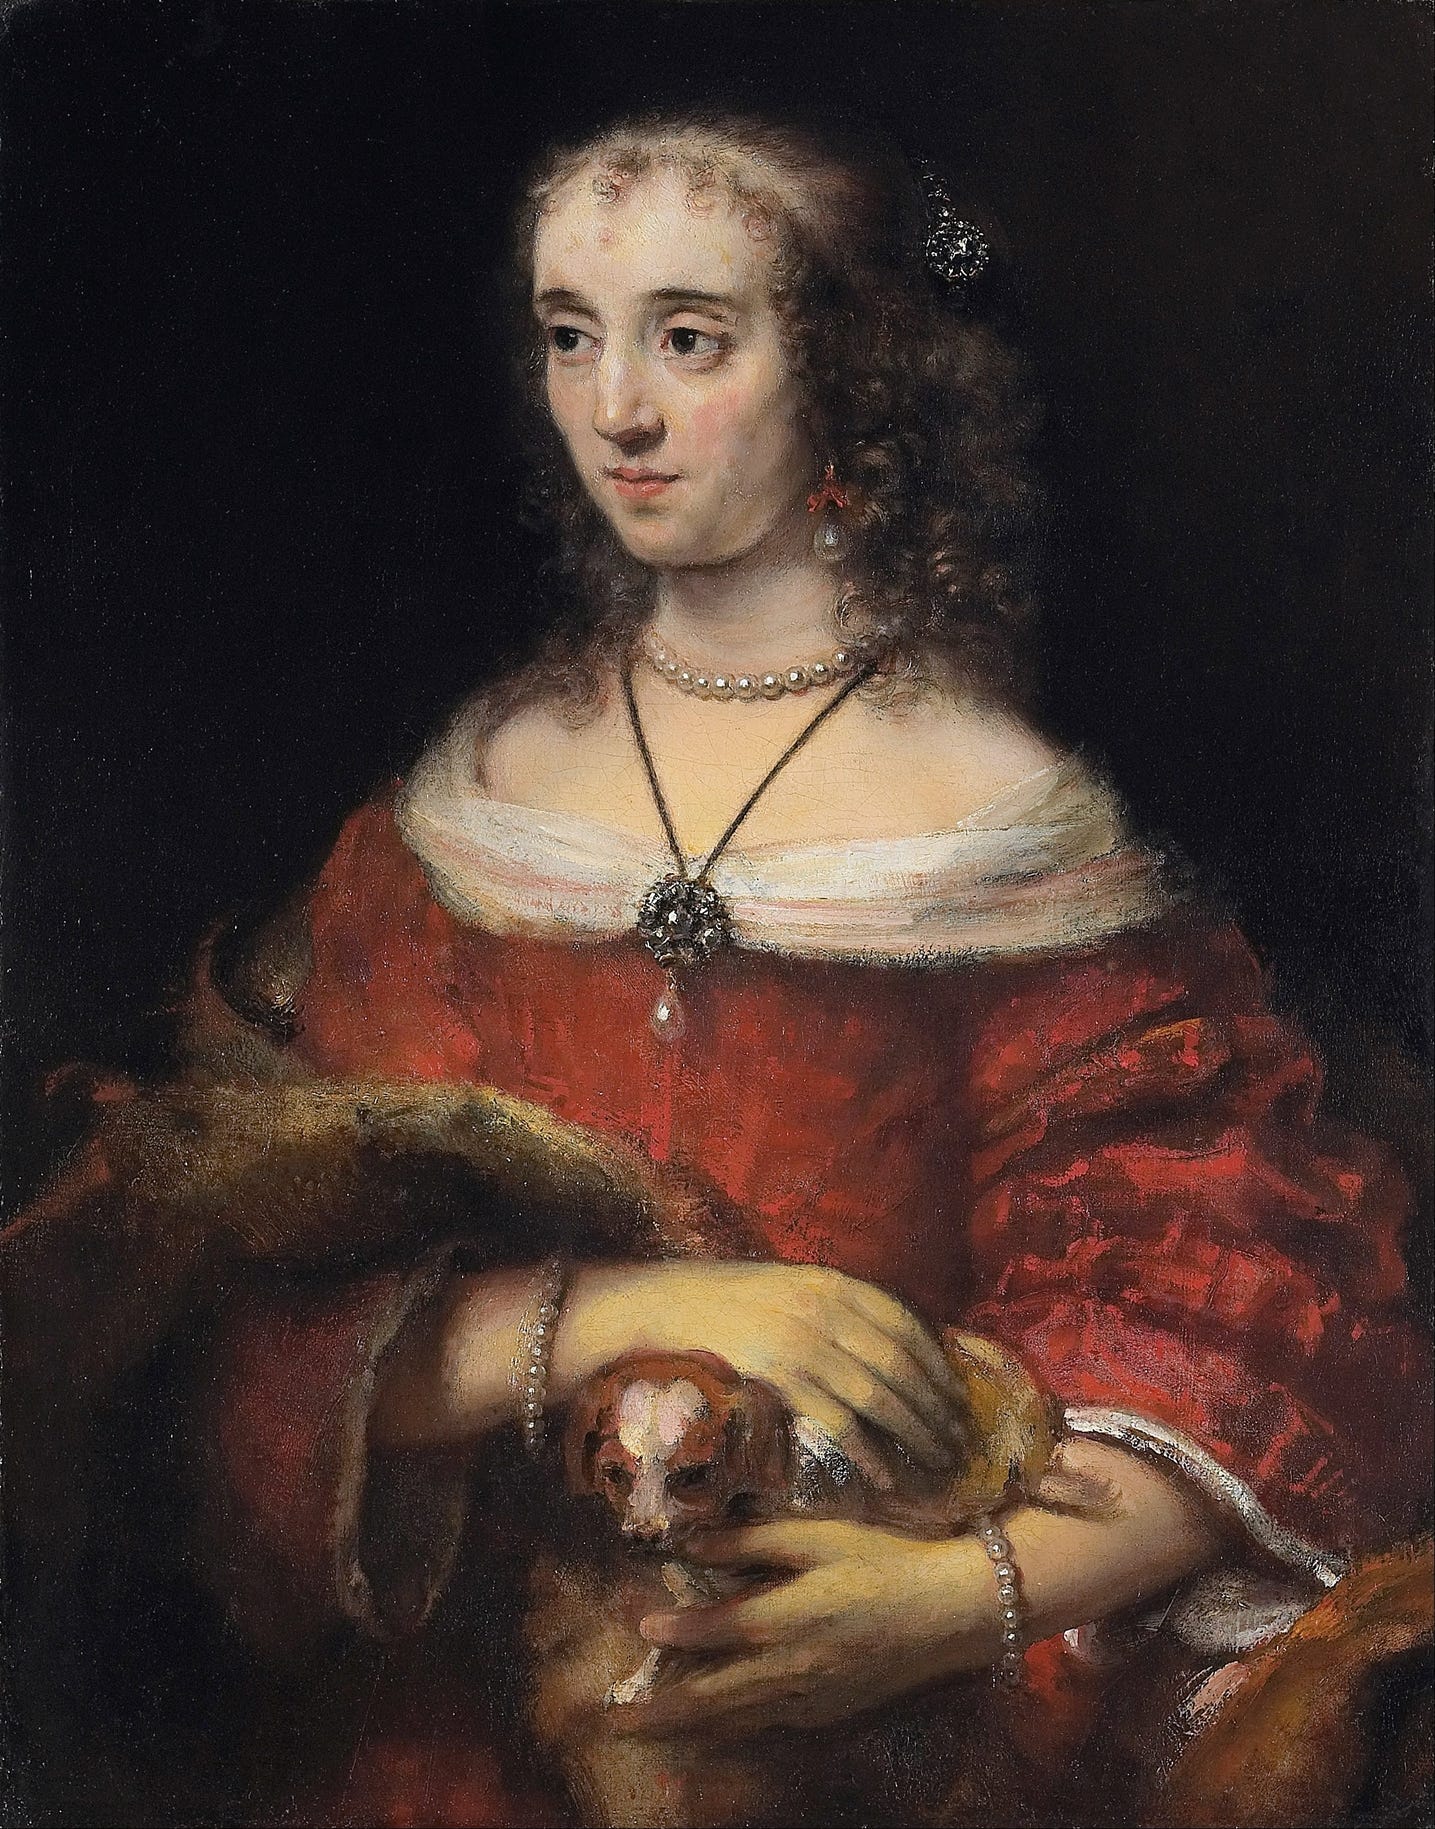 Portrait of a Lady with a Lap Dog (ca 1665) by Rembrandt van Rijn